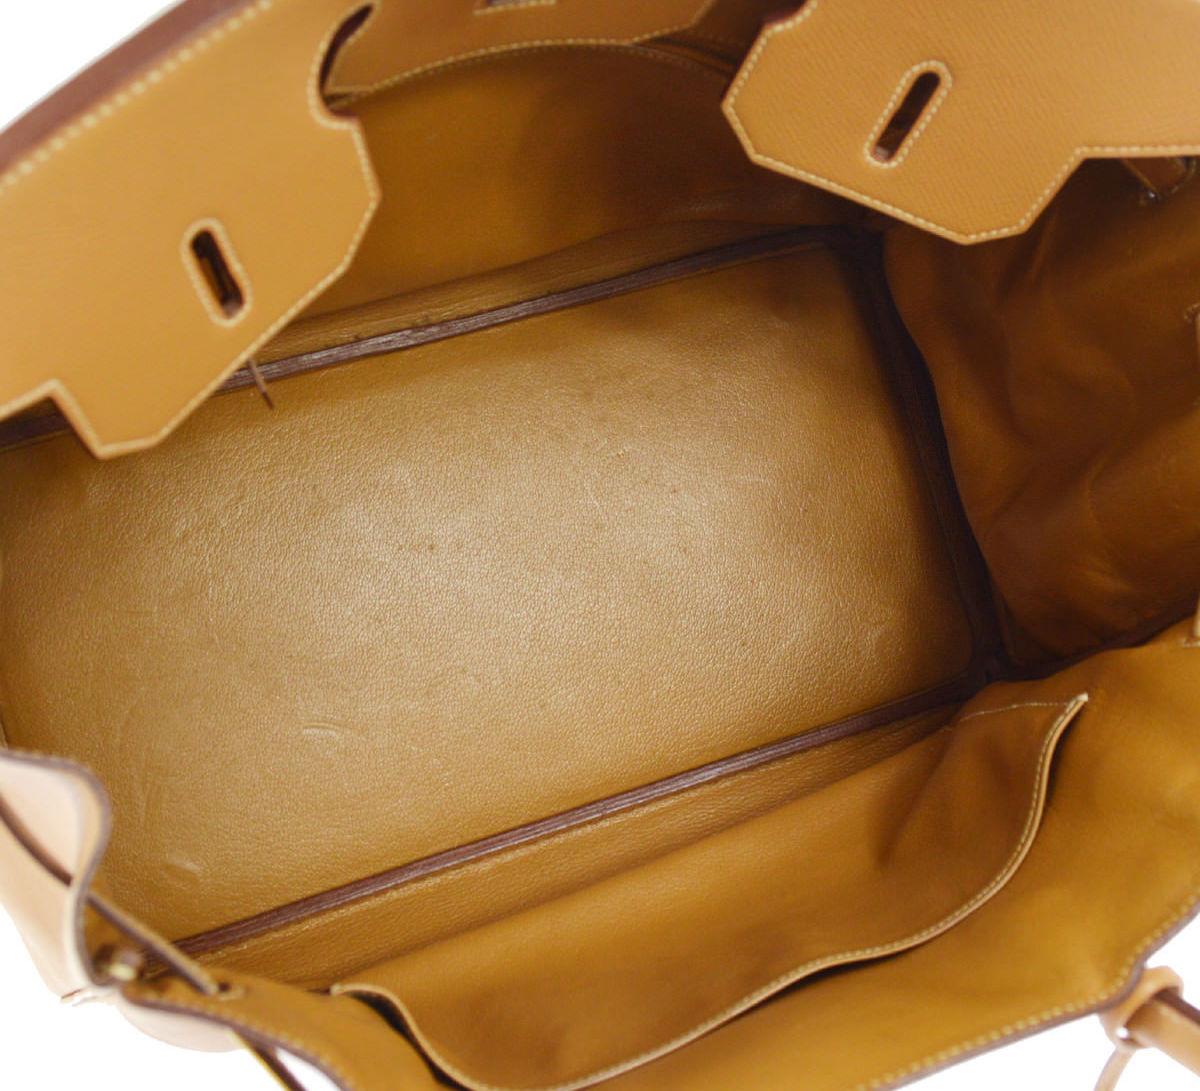 Hermes Birkin 35 Cognac Leather Top Handle Satchel Carryall Bag W/Accessories 1